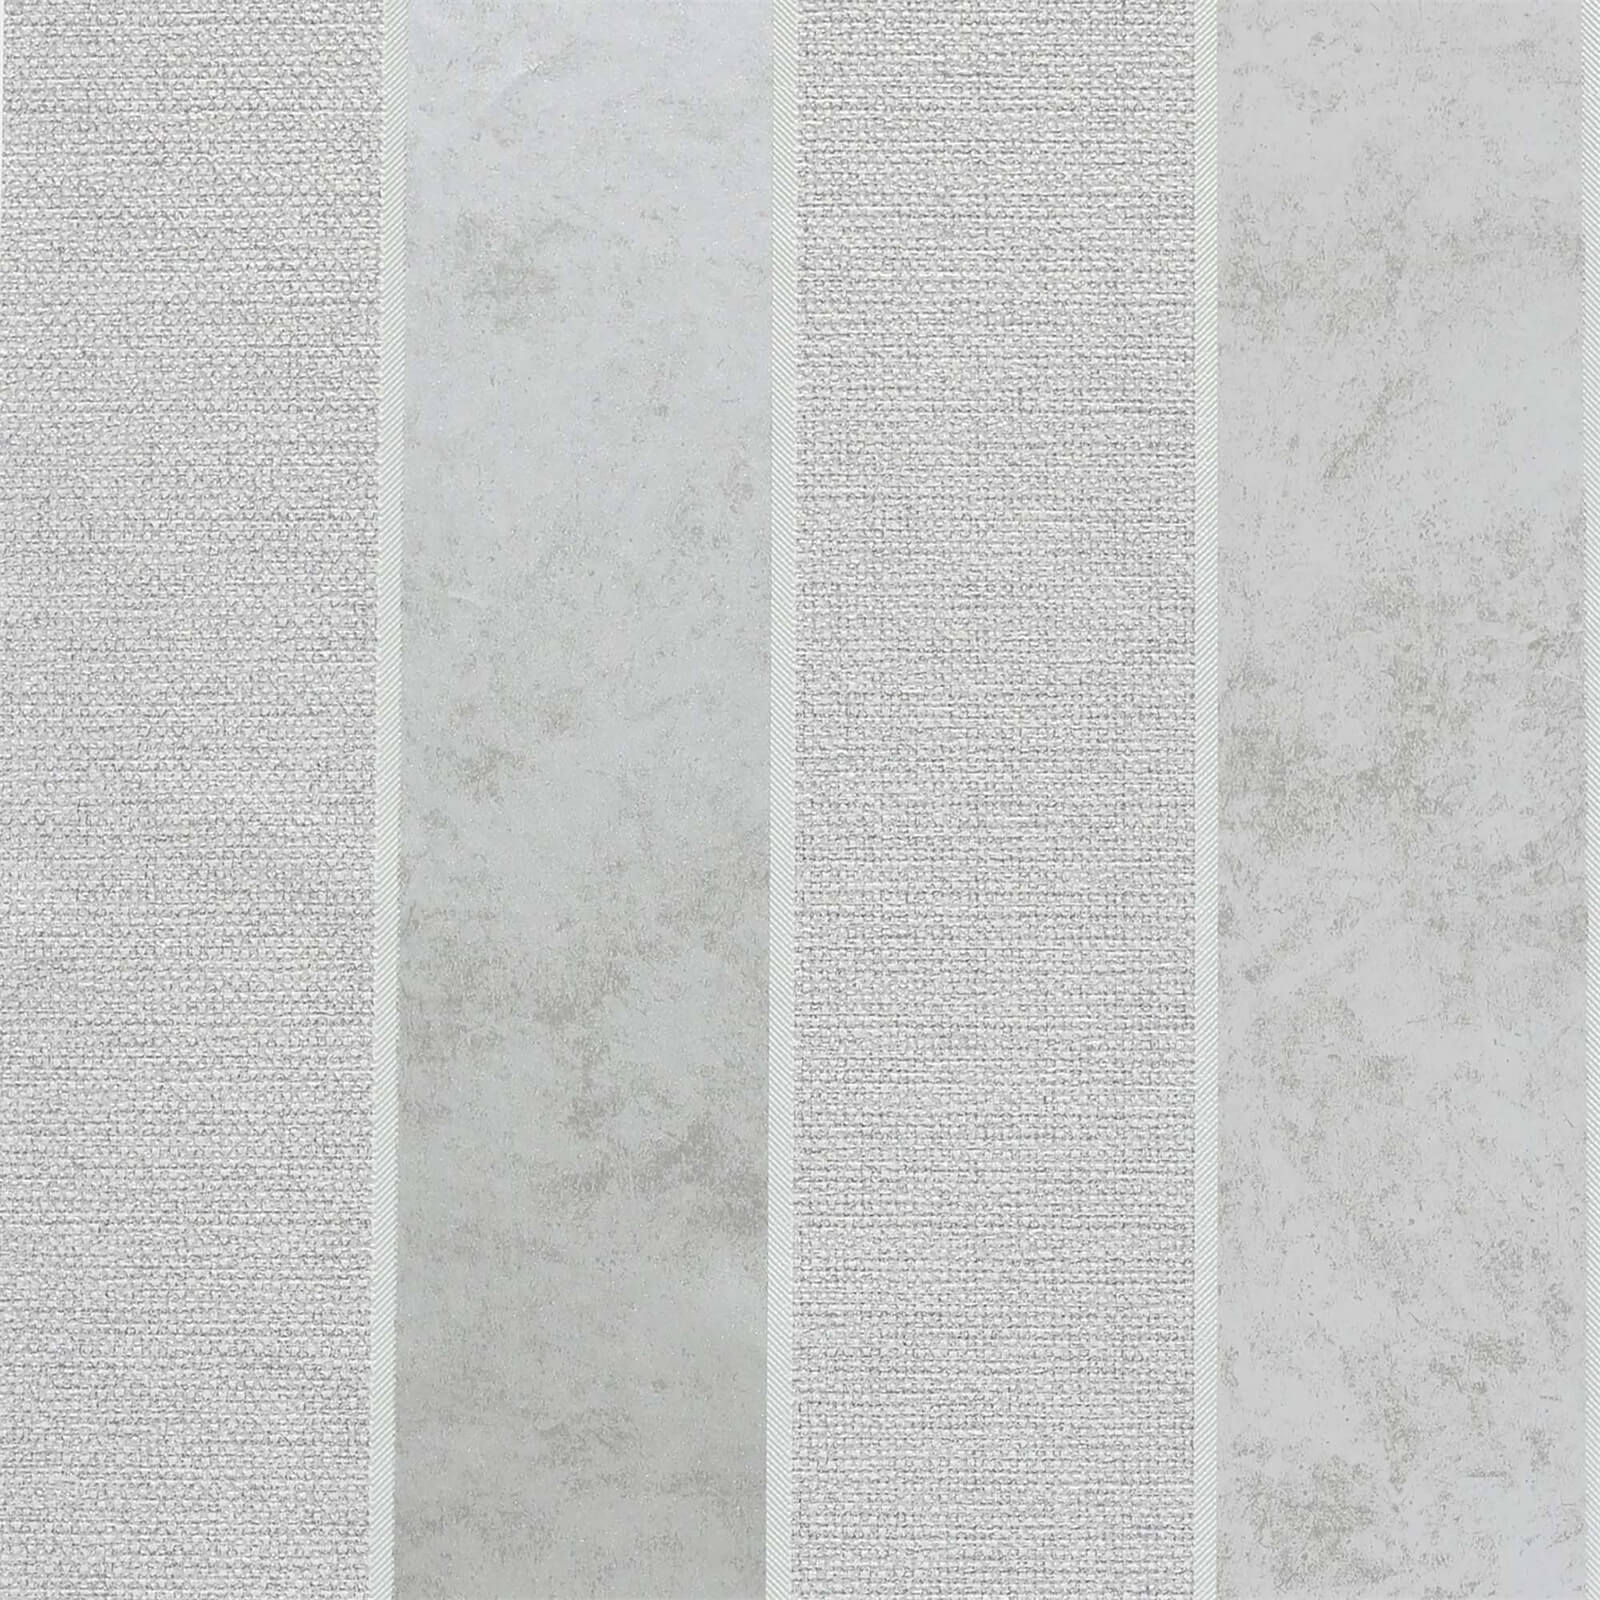 Arthouse Calico Stripe Grey Wallpaper